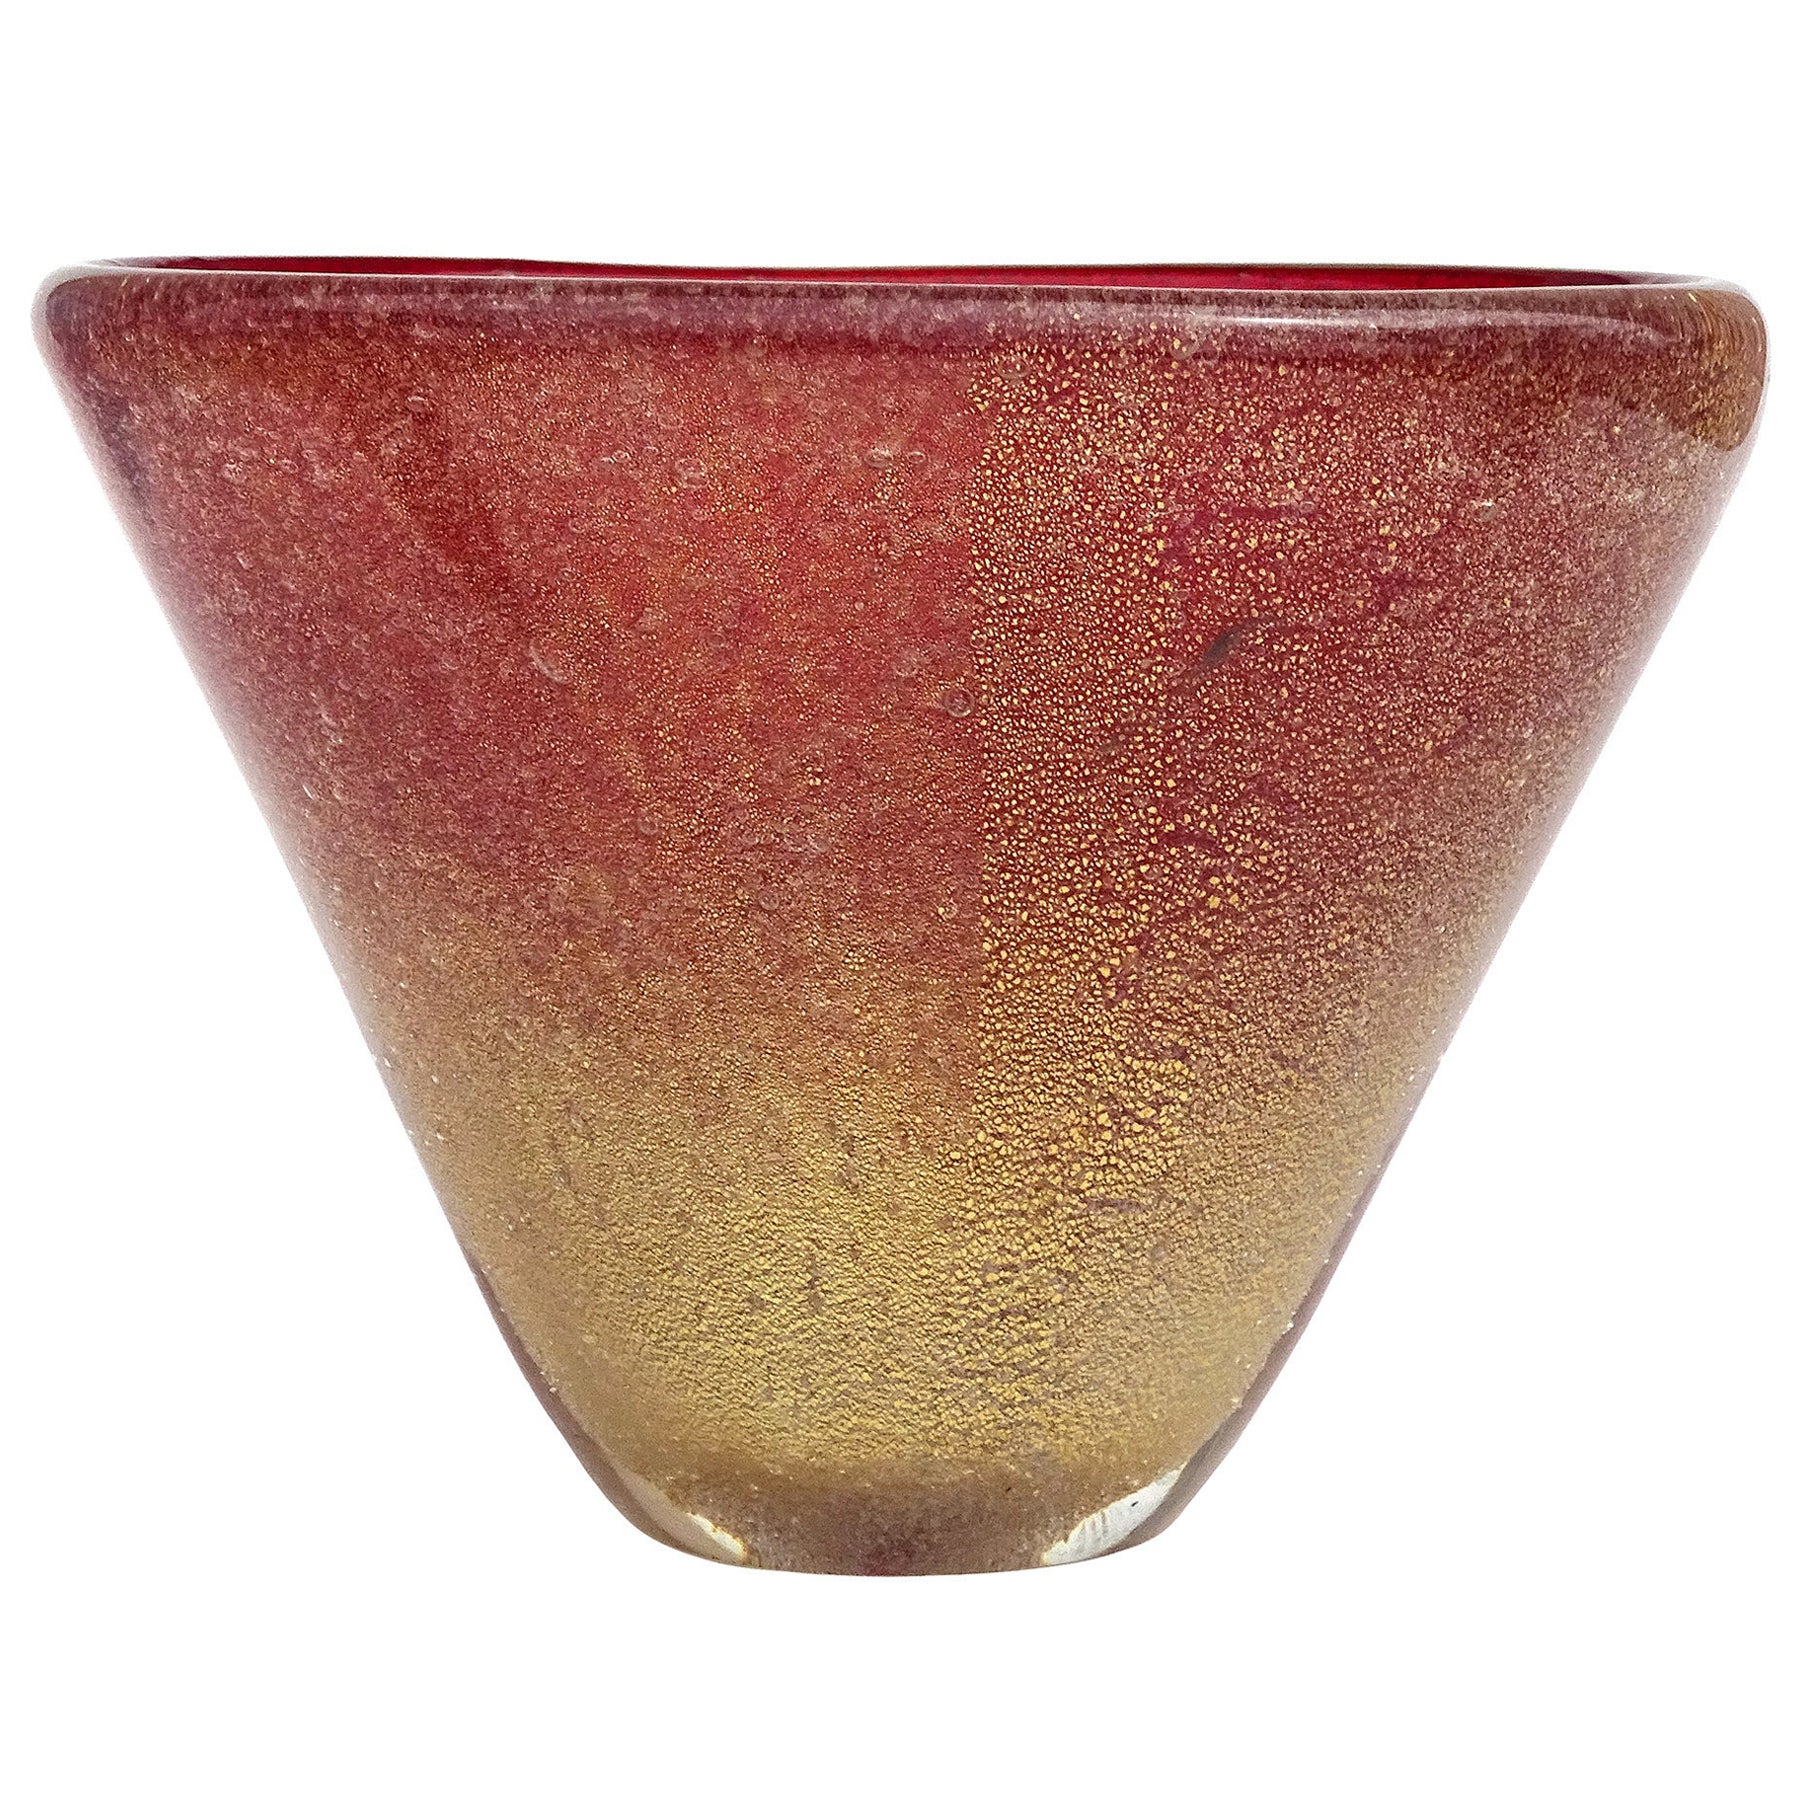 Seguso Vetri d'Arte Poli Murano Red Gold Flecks Italian Art Deco Glass Vase